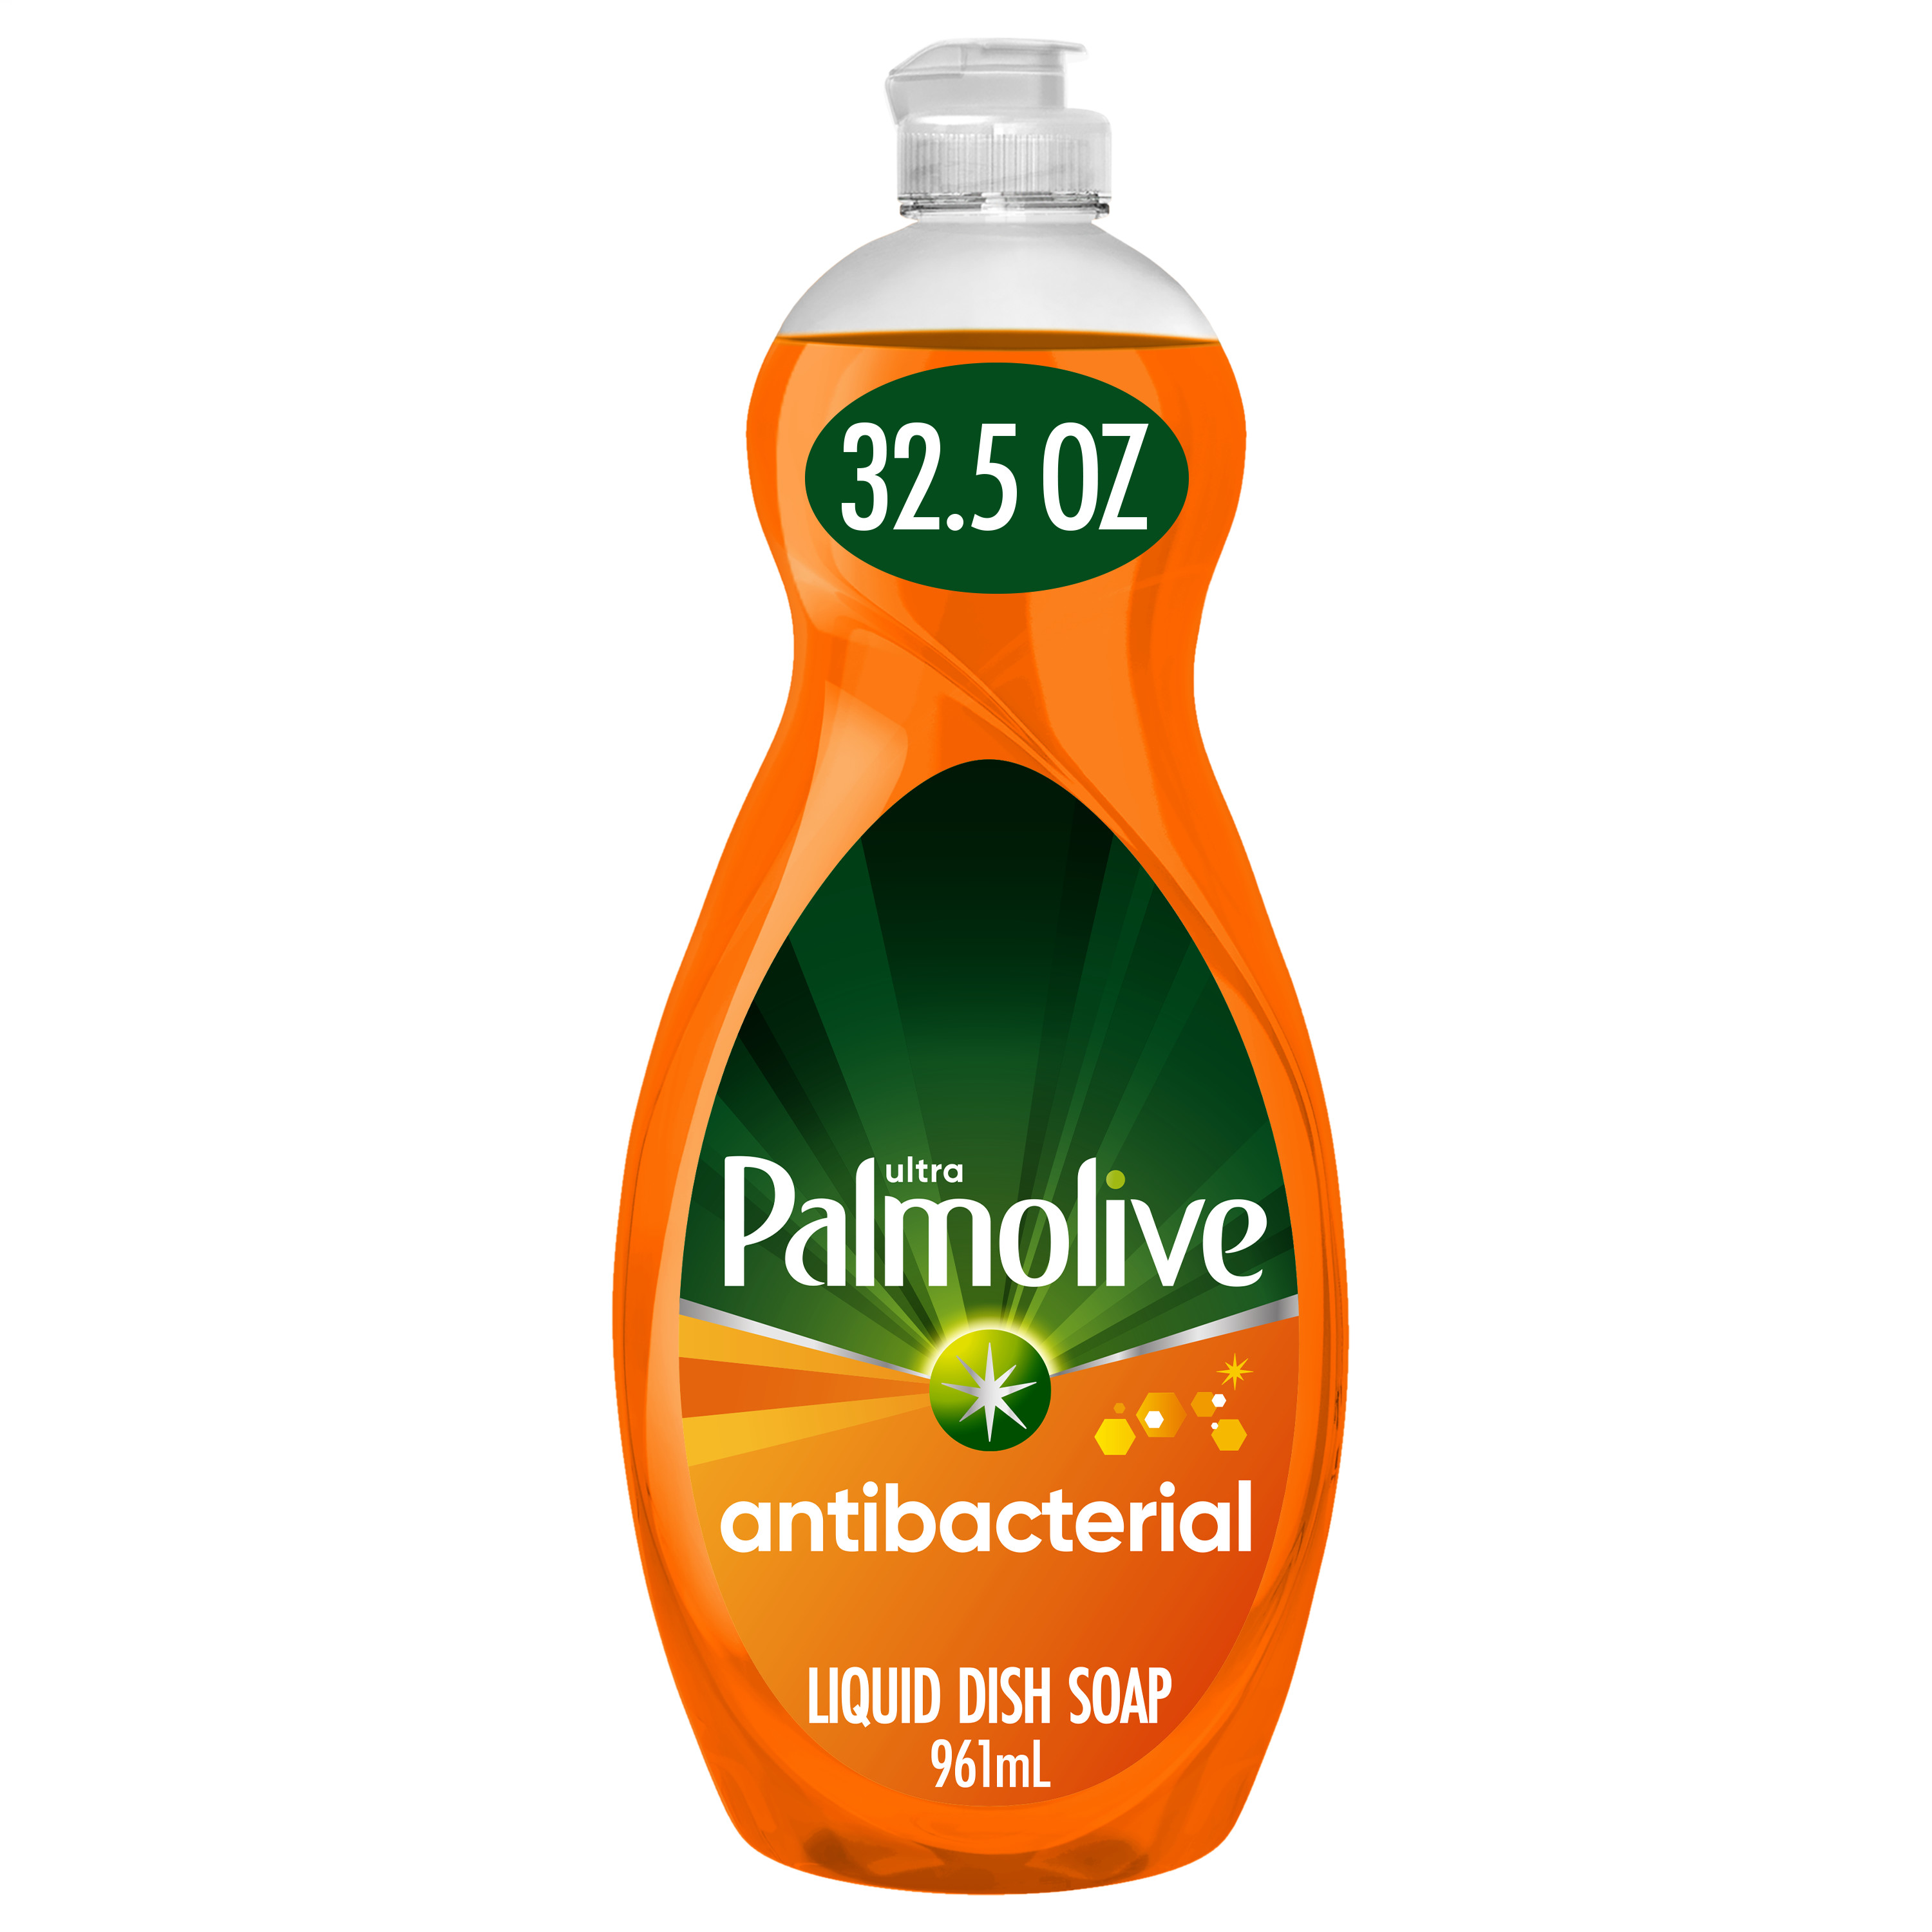 Palmolive Antibacterial Liquid Dish Soap, Orange Scent, 32.5 Fluid Ounce - image 1 of 9